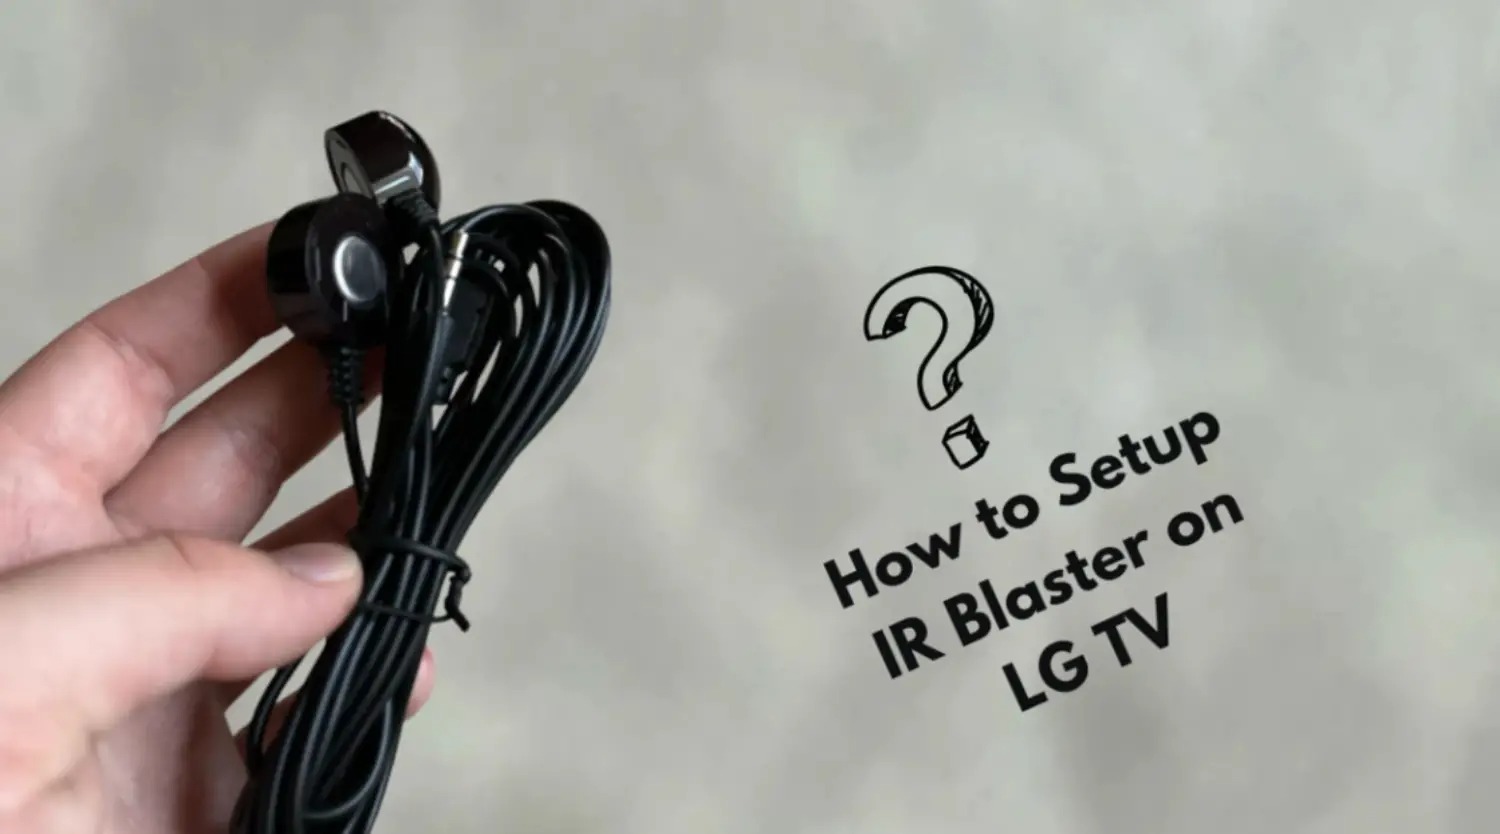 how to setup ir blaster